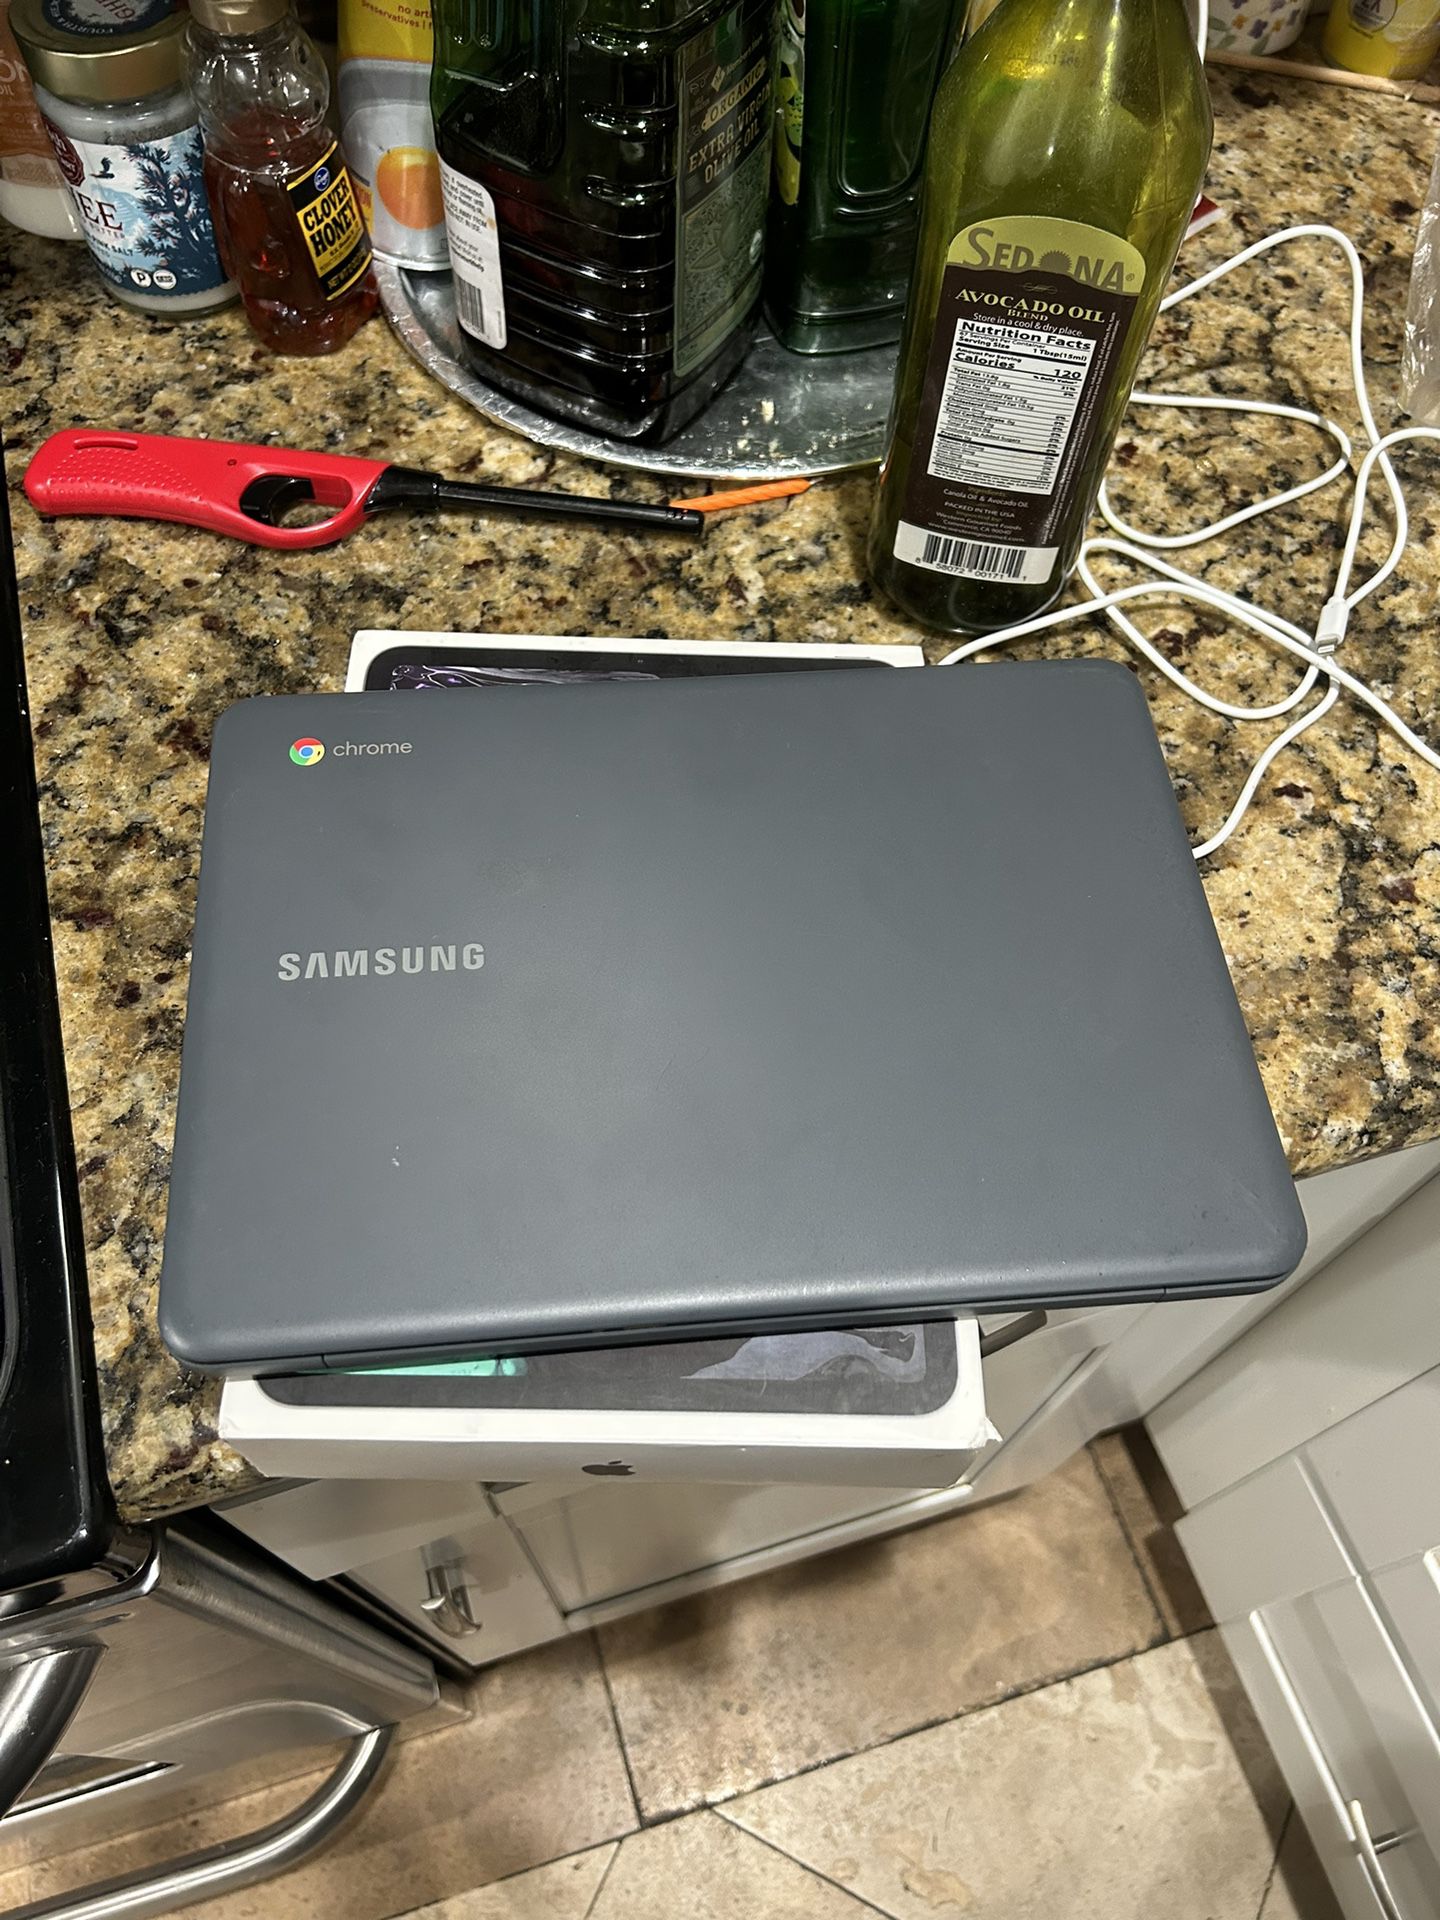 Samsung ‘Chromebook’ Laptop